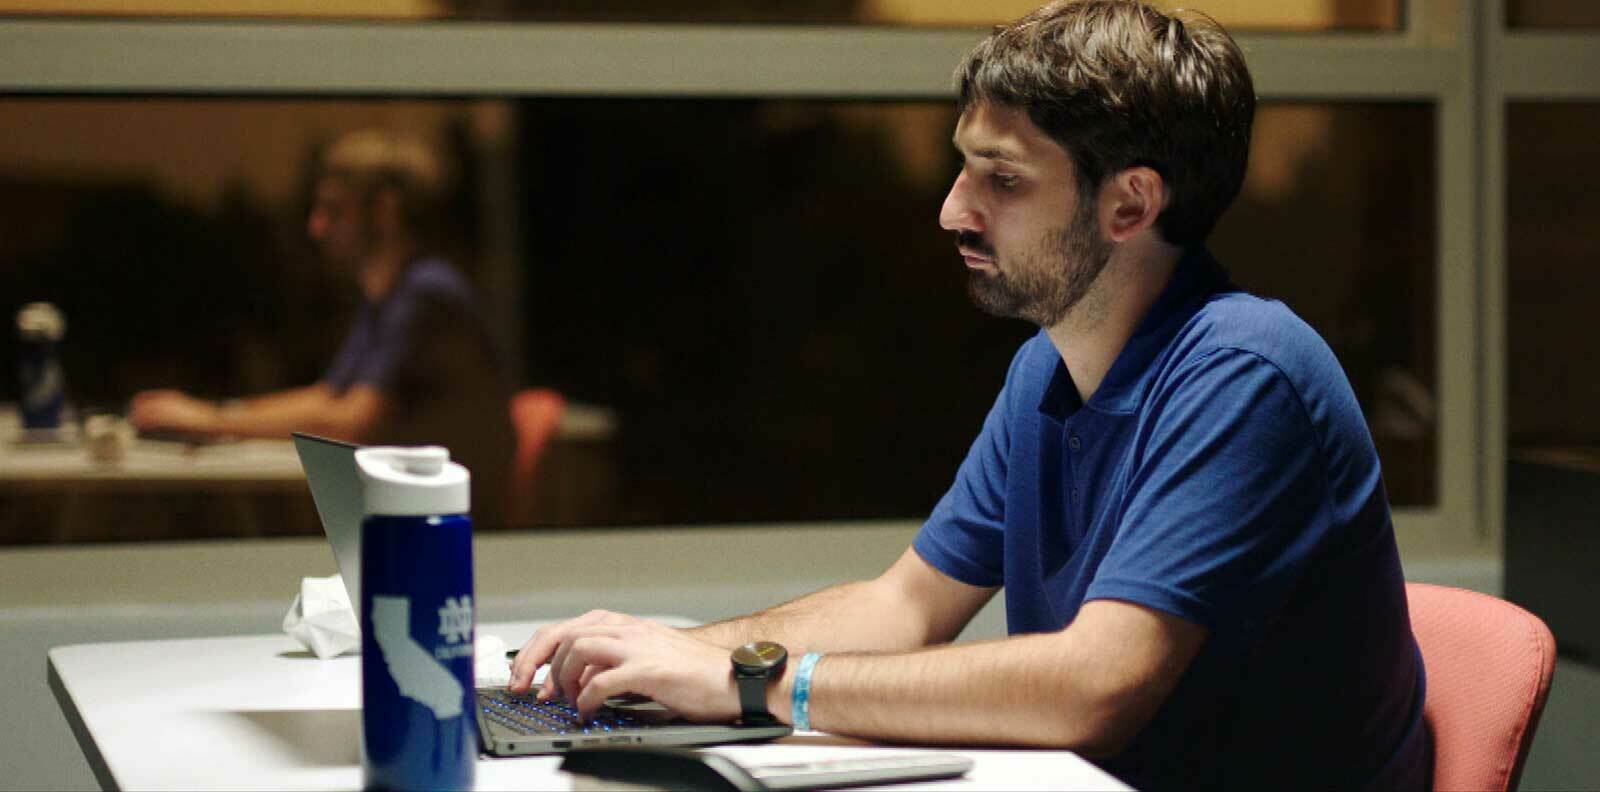 Evan Nichols types on a laptop at a desk.